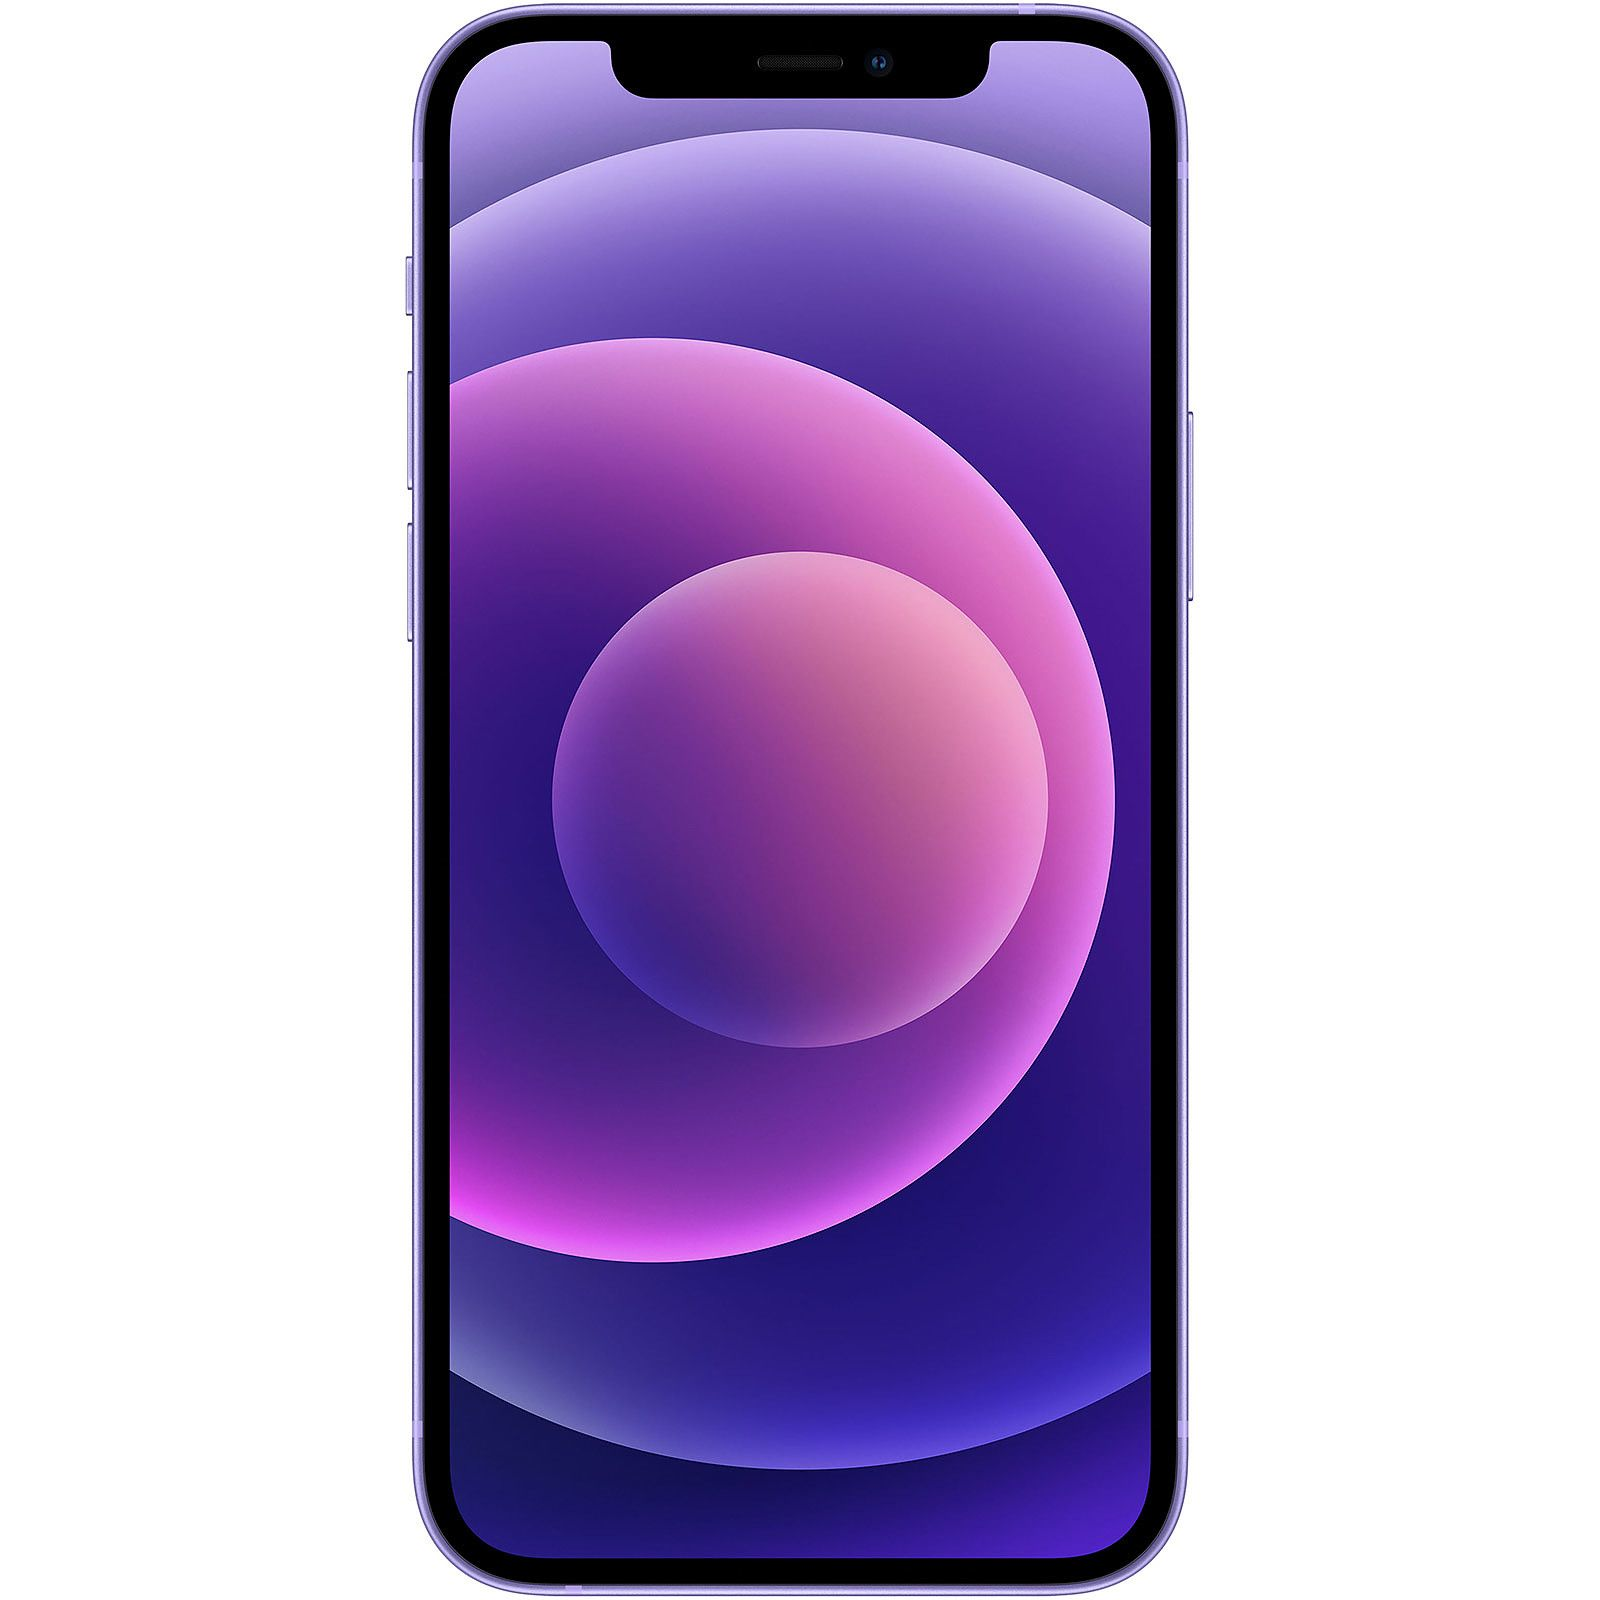 REFURBISHED violett 64 APPLE GB 12 (*) GB 64 iPhone